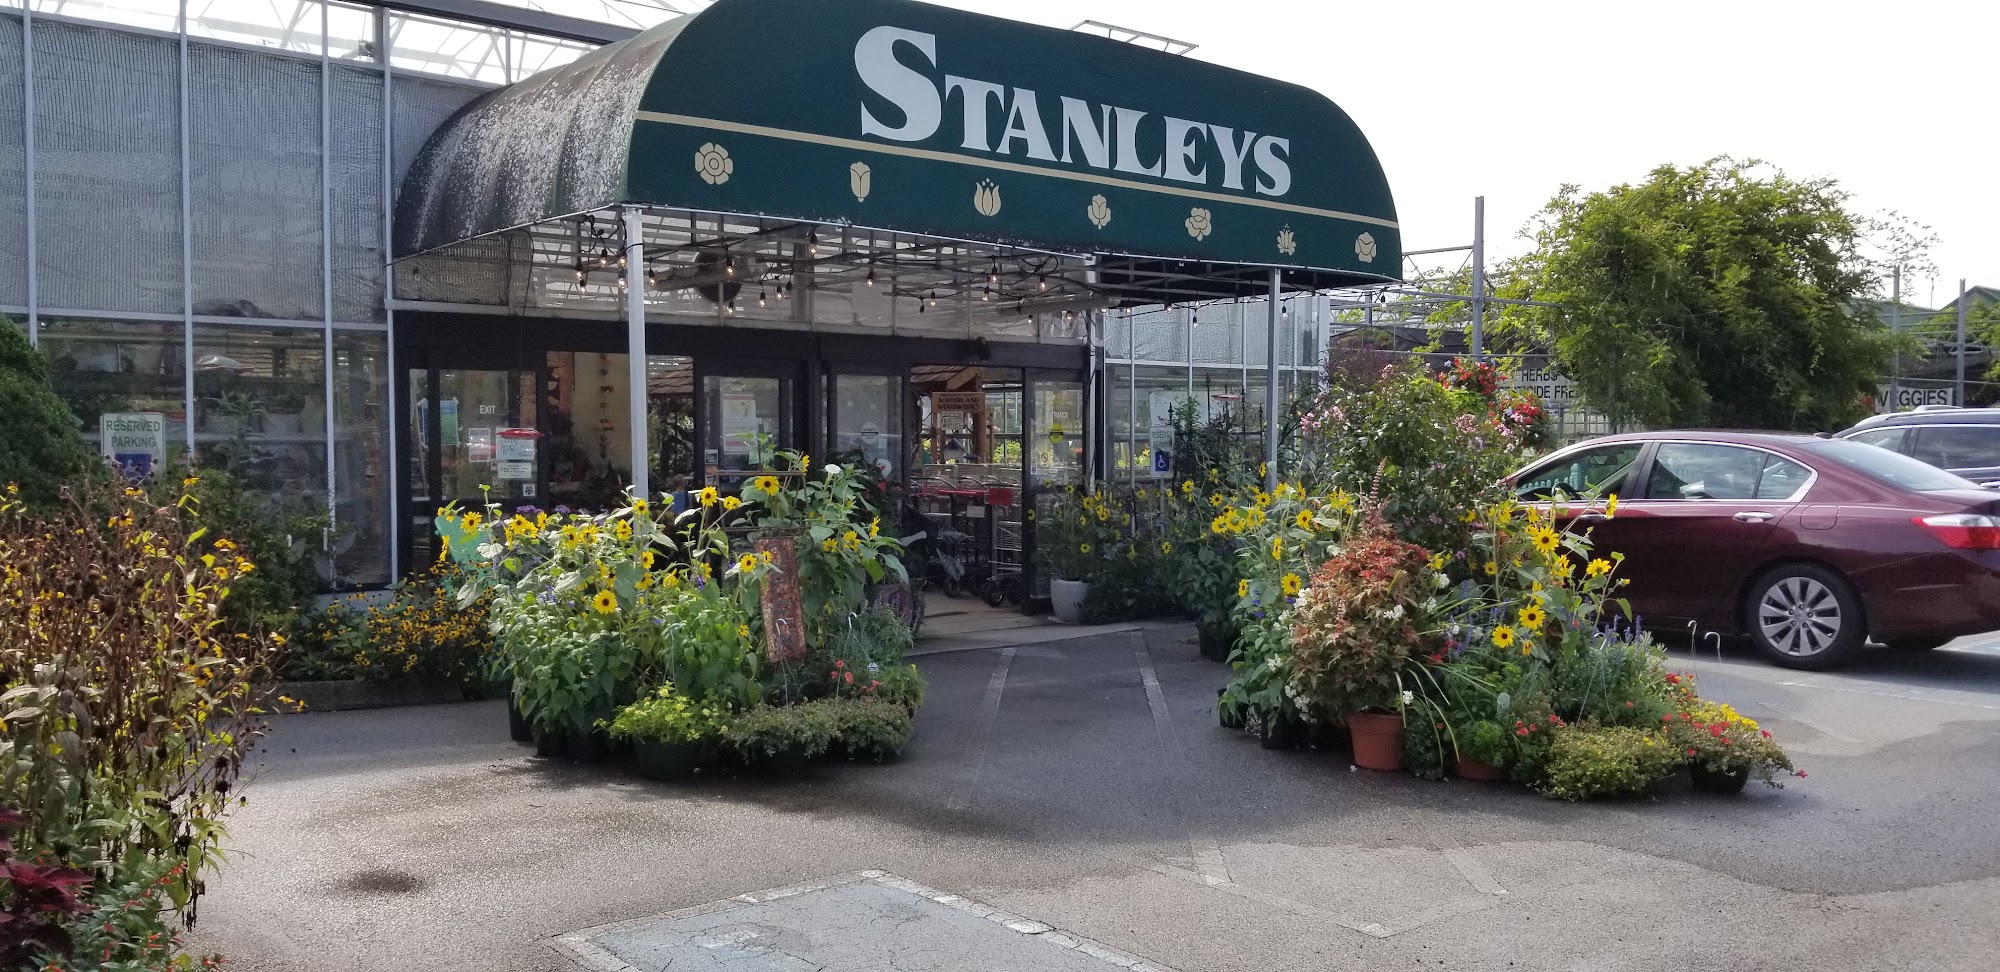 Stanley's Greenhouse